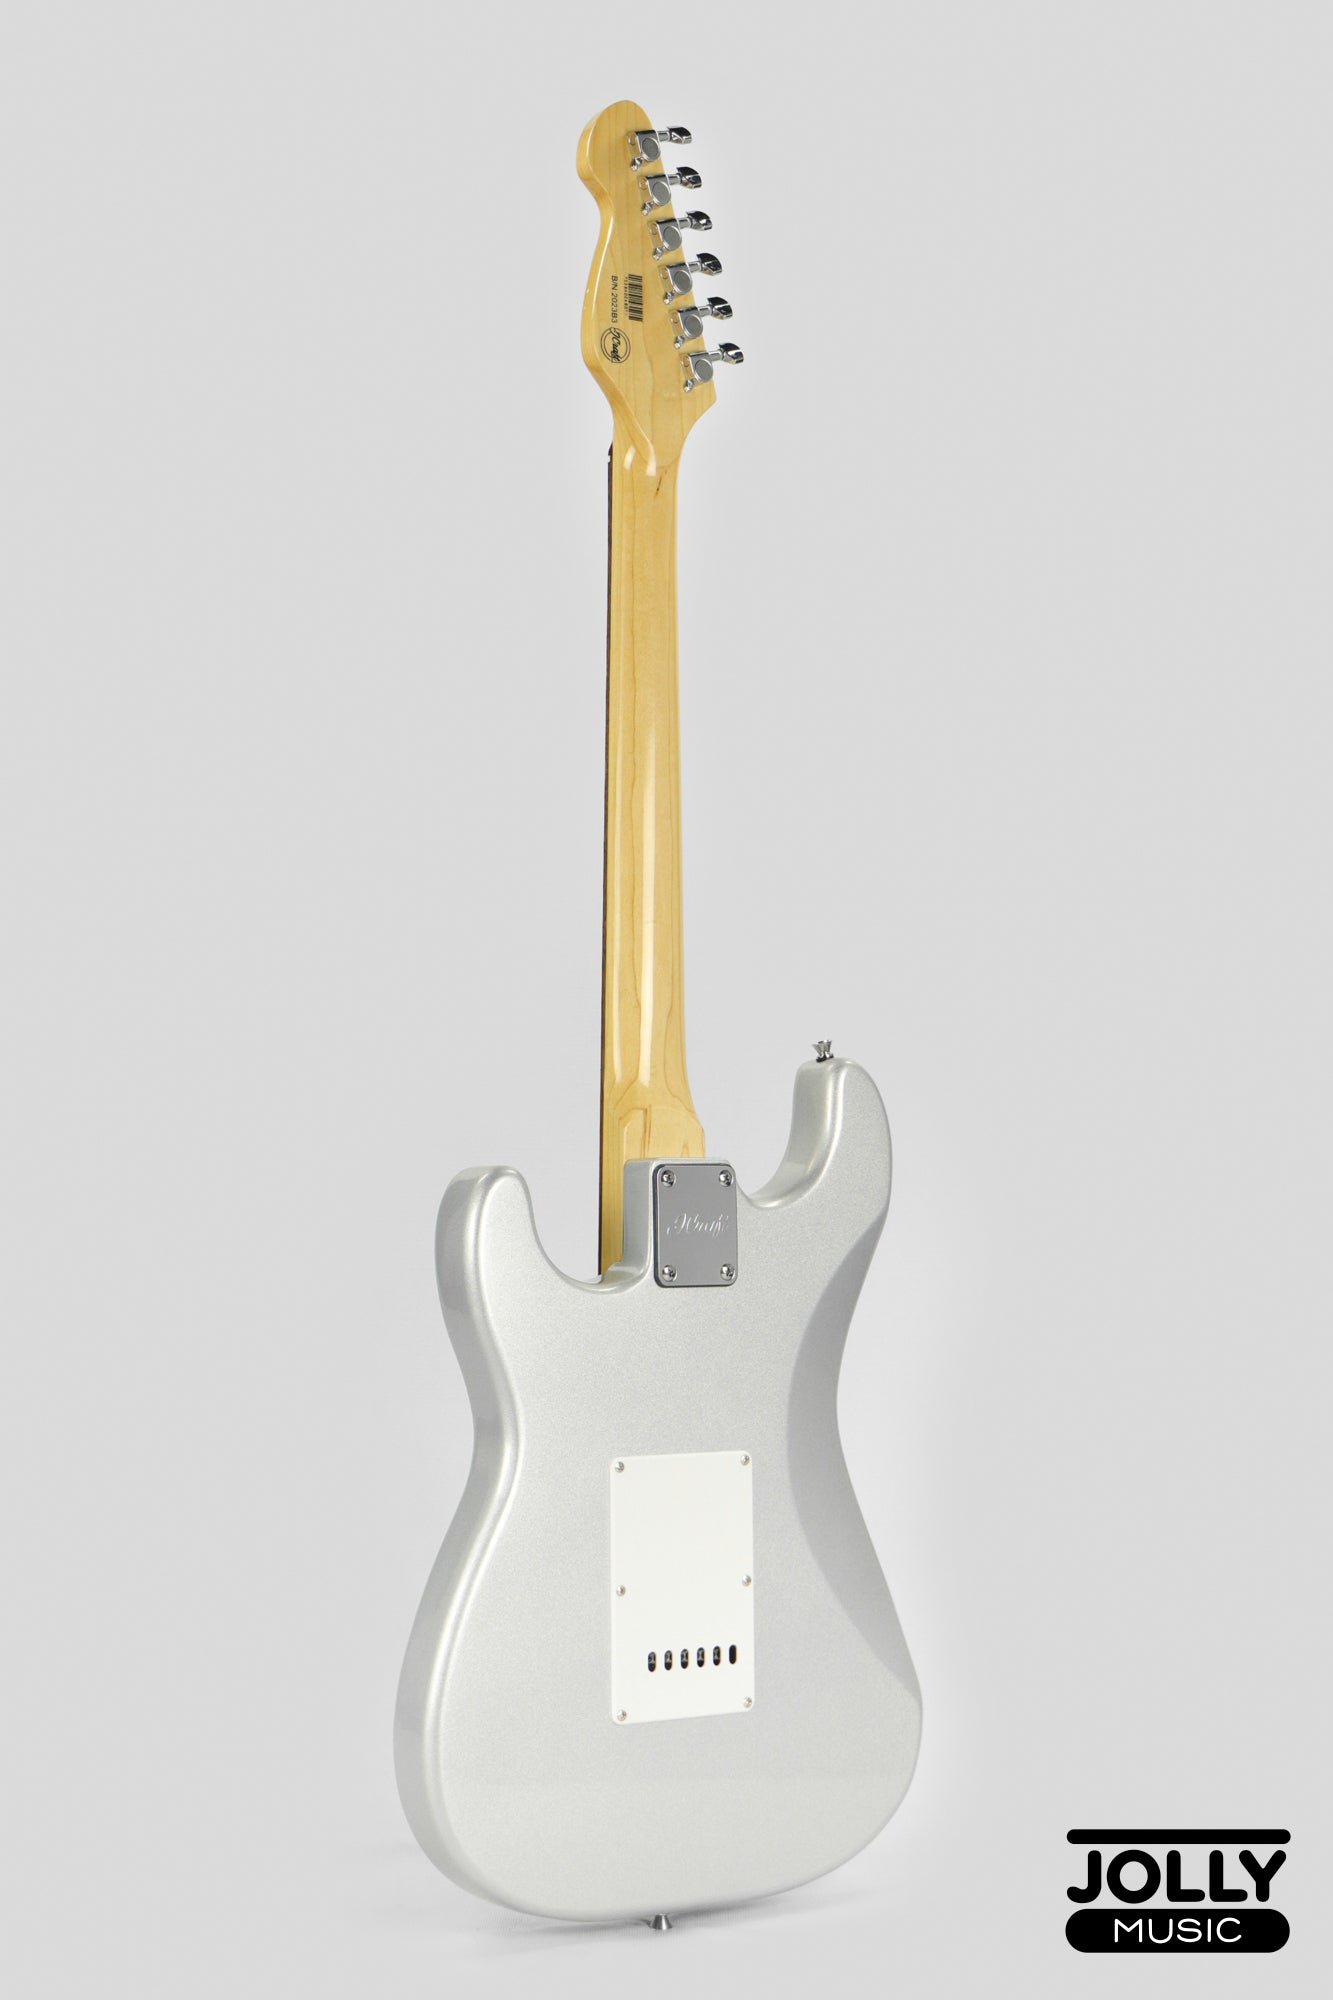 JCraft S-2HC HSS Electric Guitar with Gigbag - Silver Sky